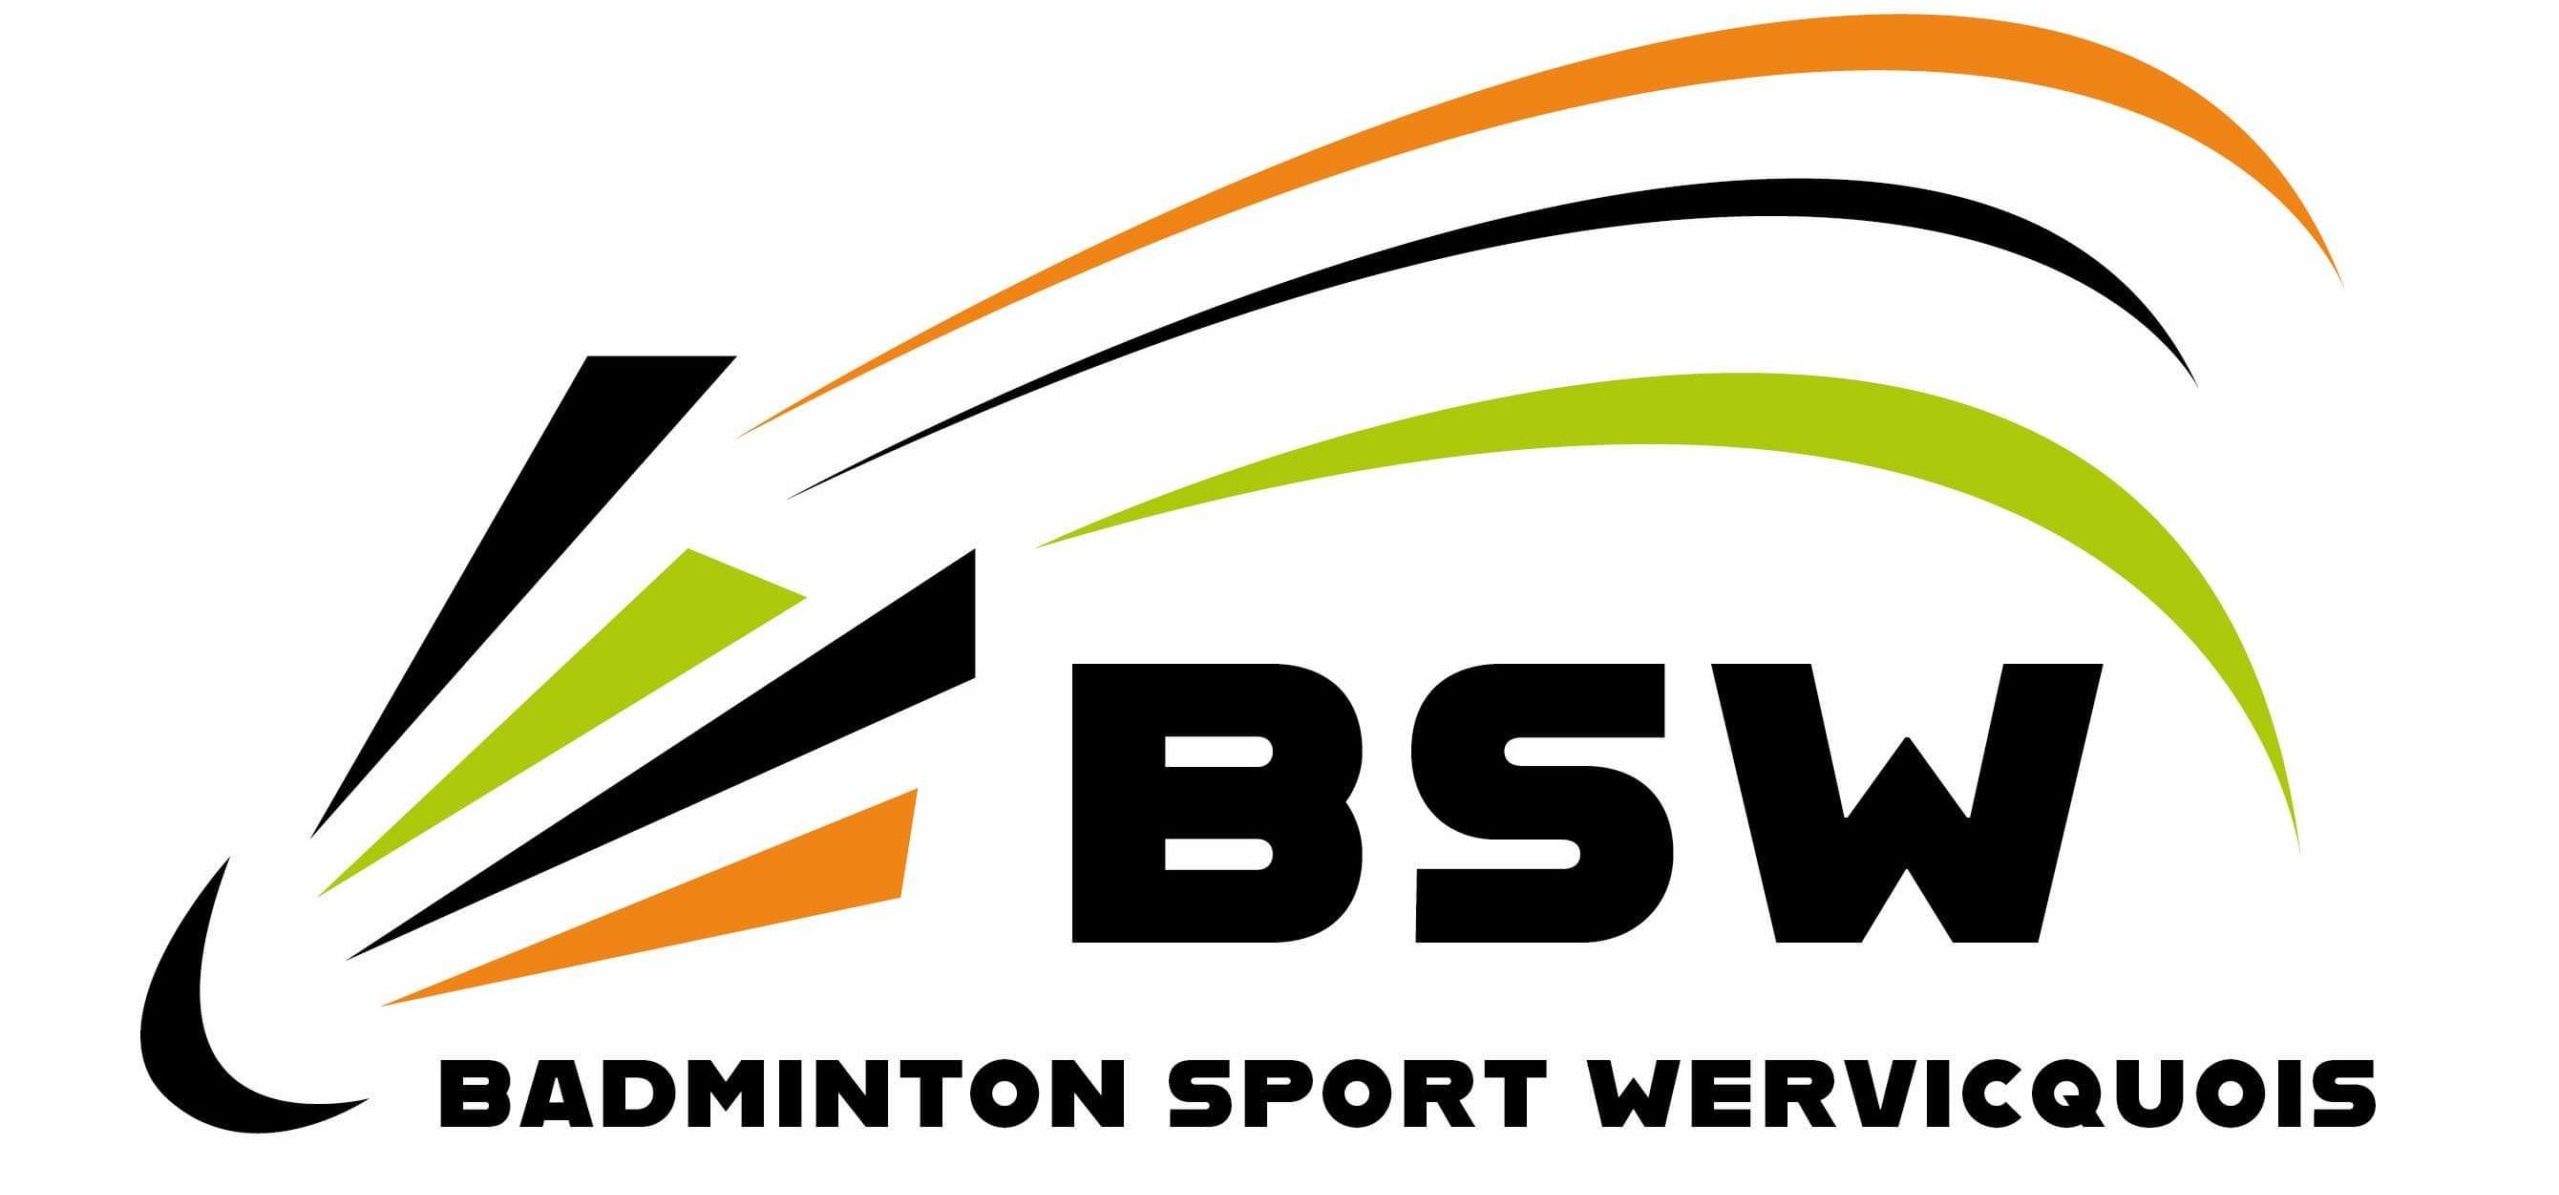 Badminton Sport Wervicquois